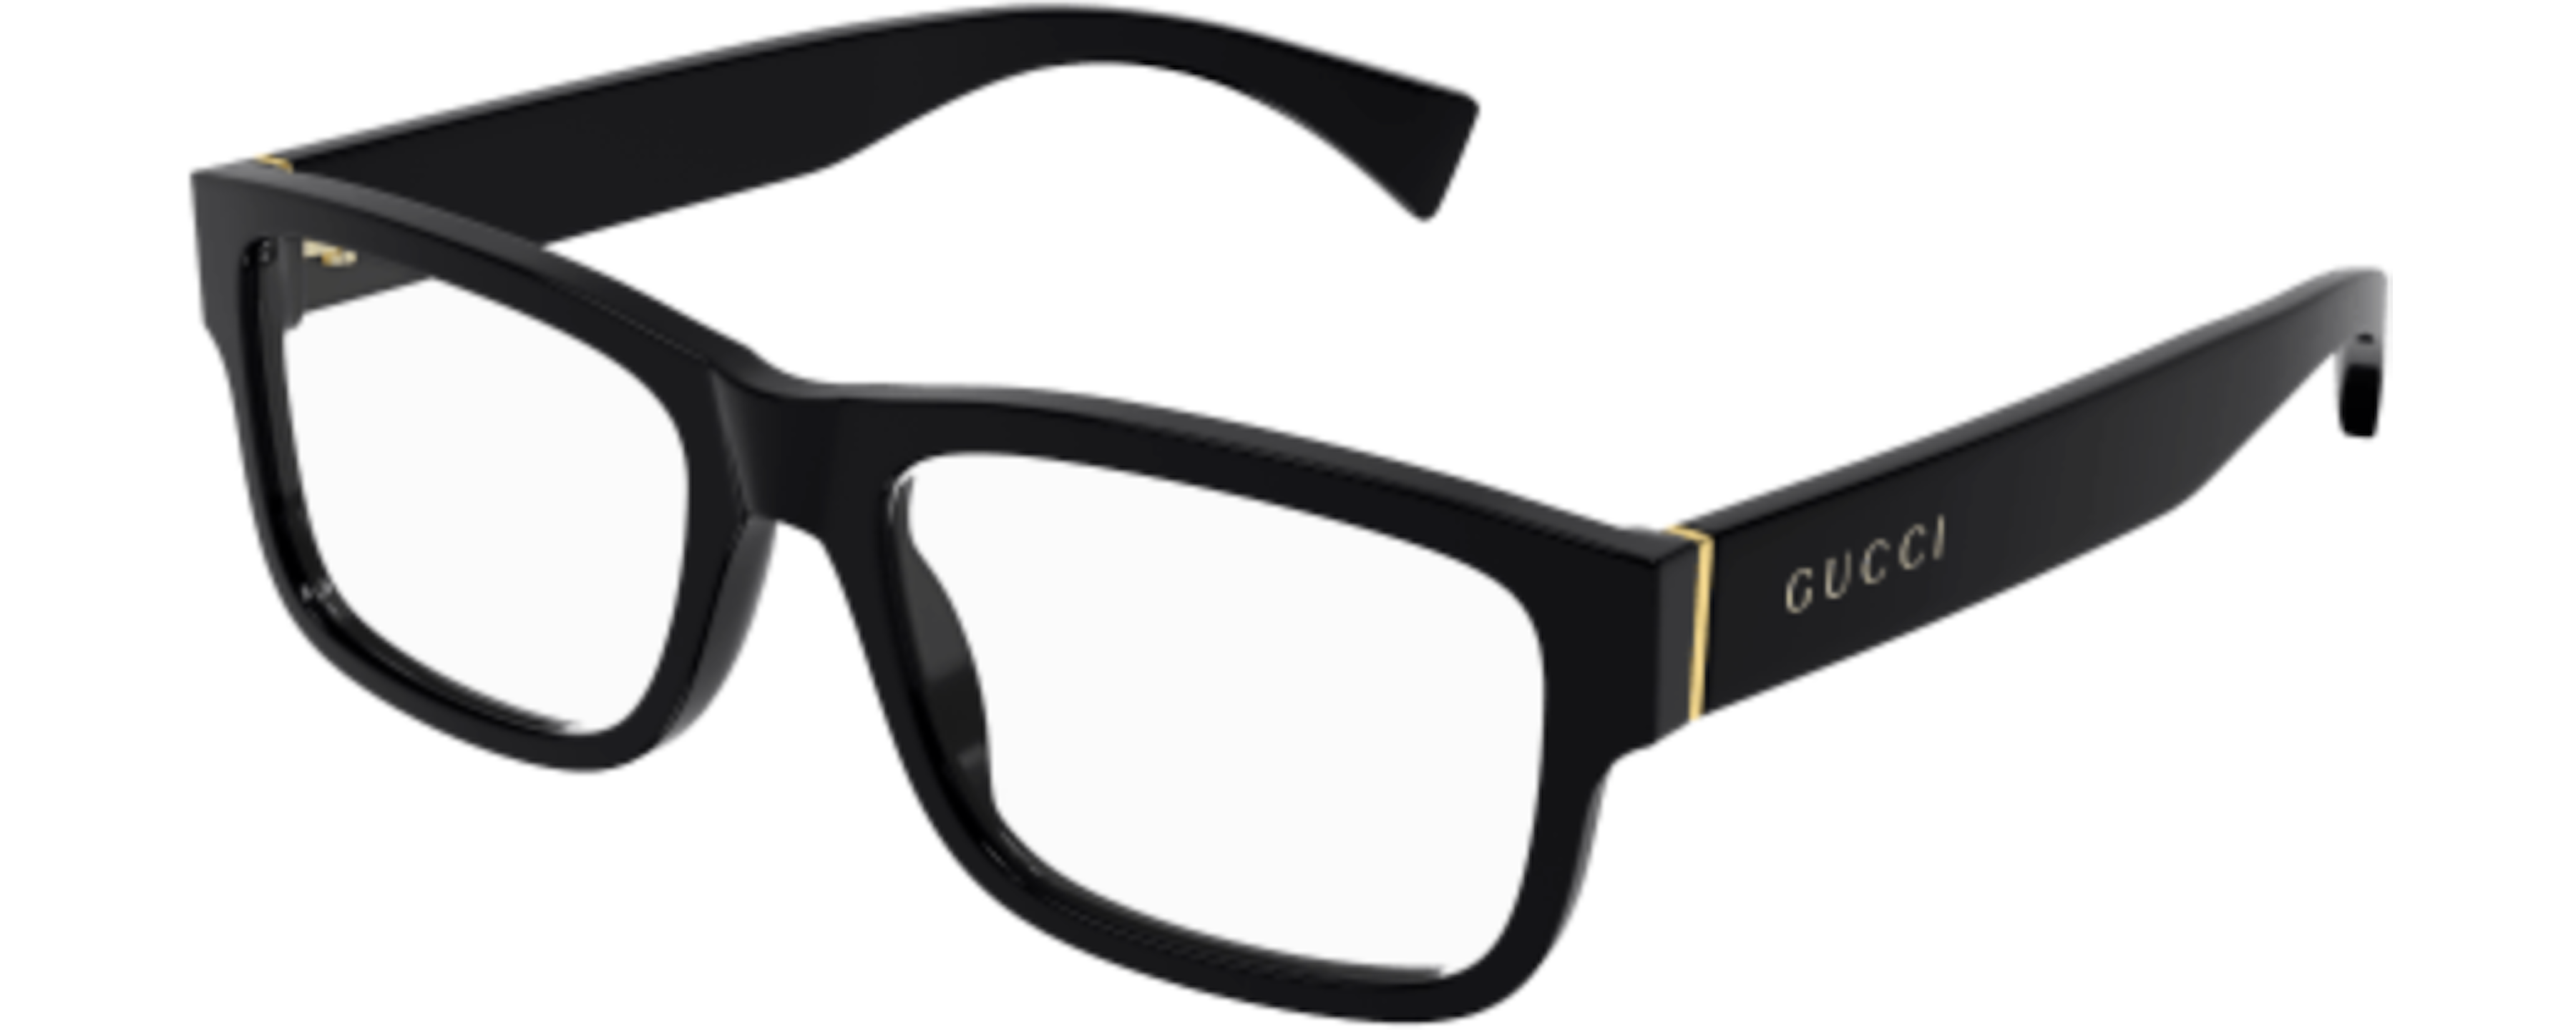 Gucci / GG1141O / BLACK-BLACK-TRANSPARENT - Shop Glasses Online - Simon ...